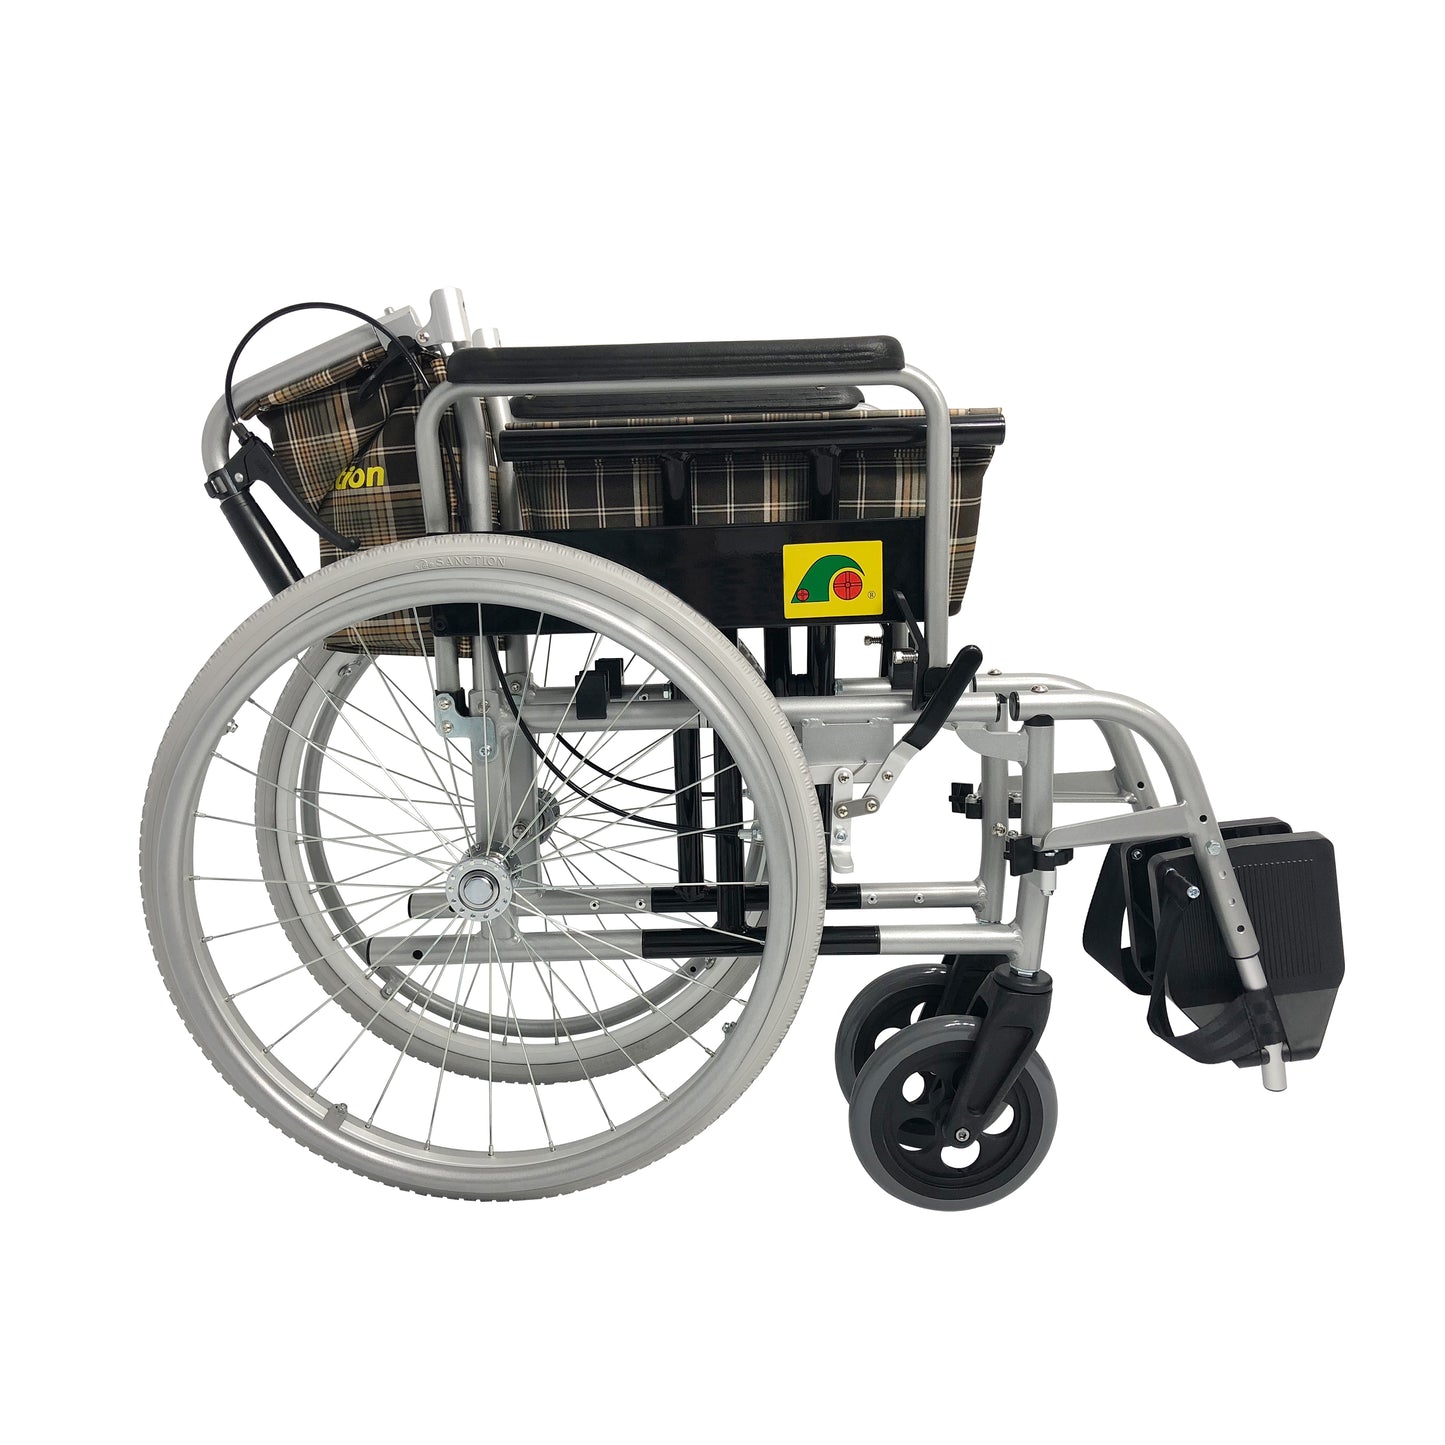 MF-5620A-AB 輕量移位輪椅 - Sanction Industry 祥巽輔具